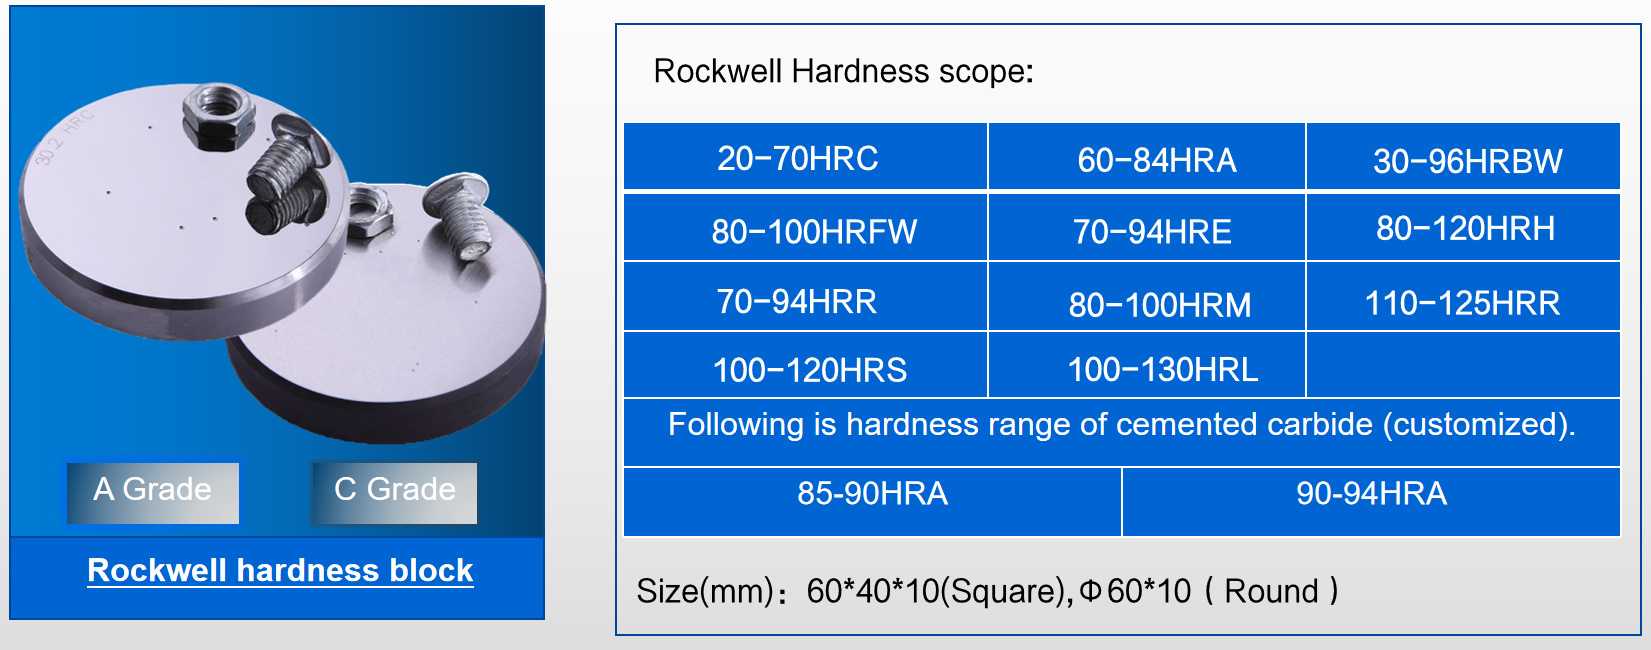 Rockwell Hardness scope